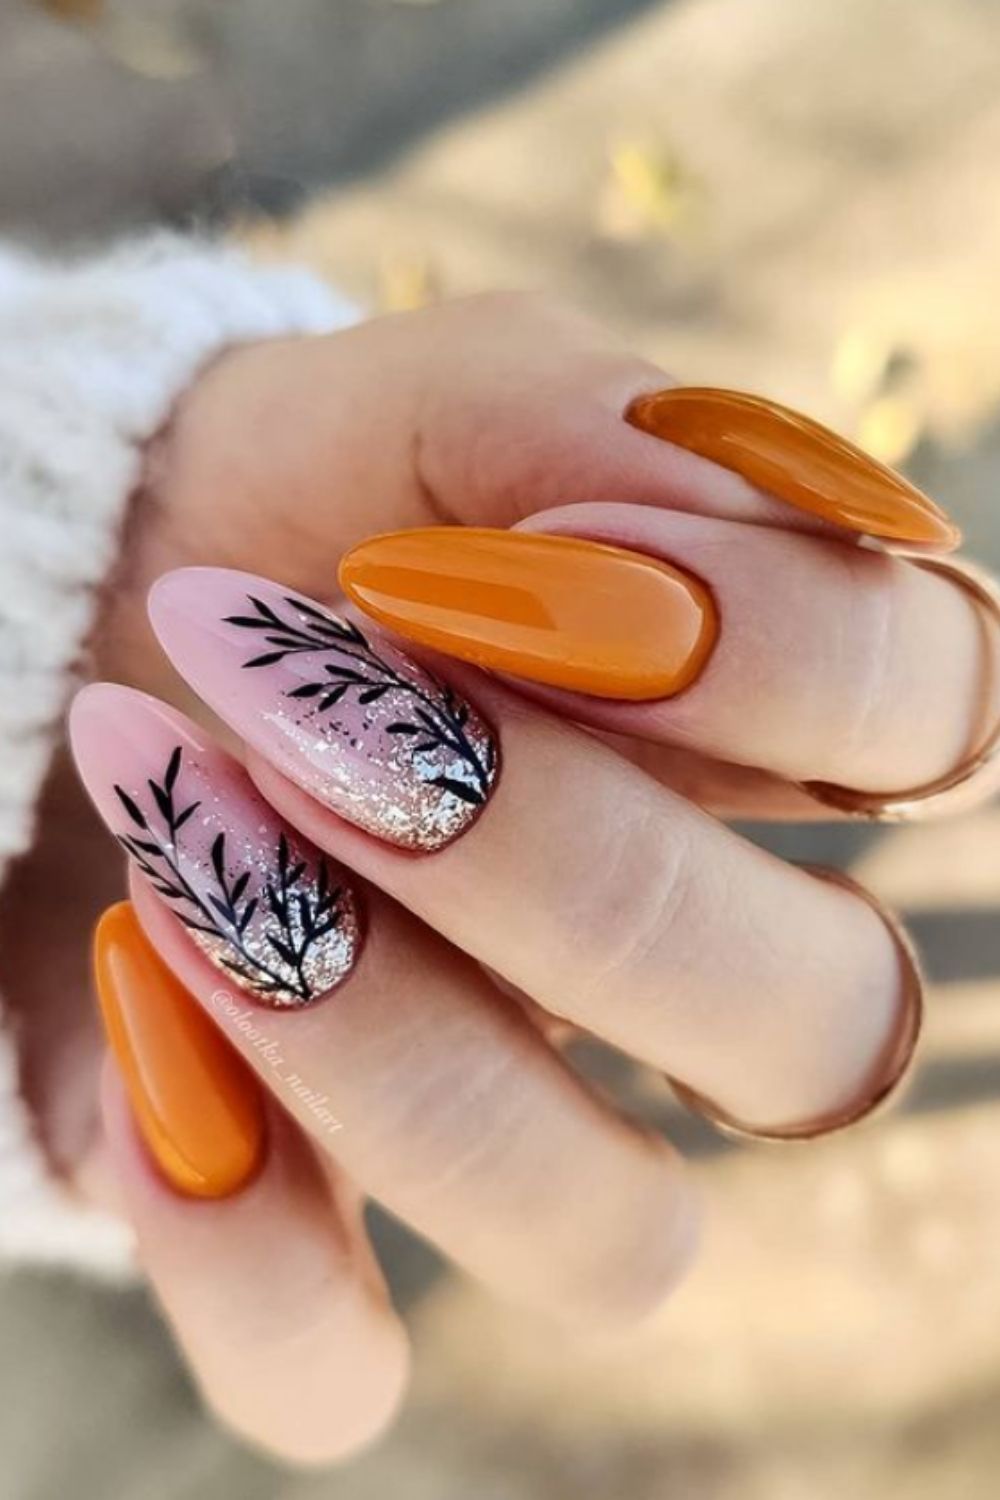 Pink and orange nails